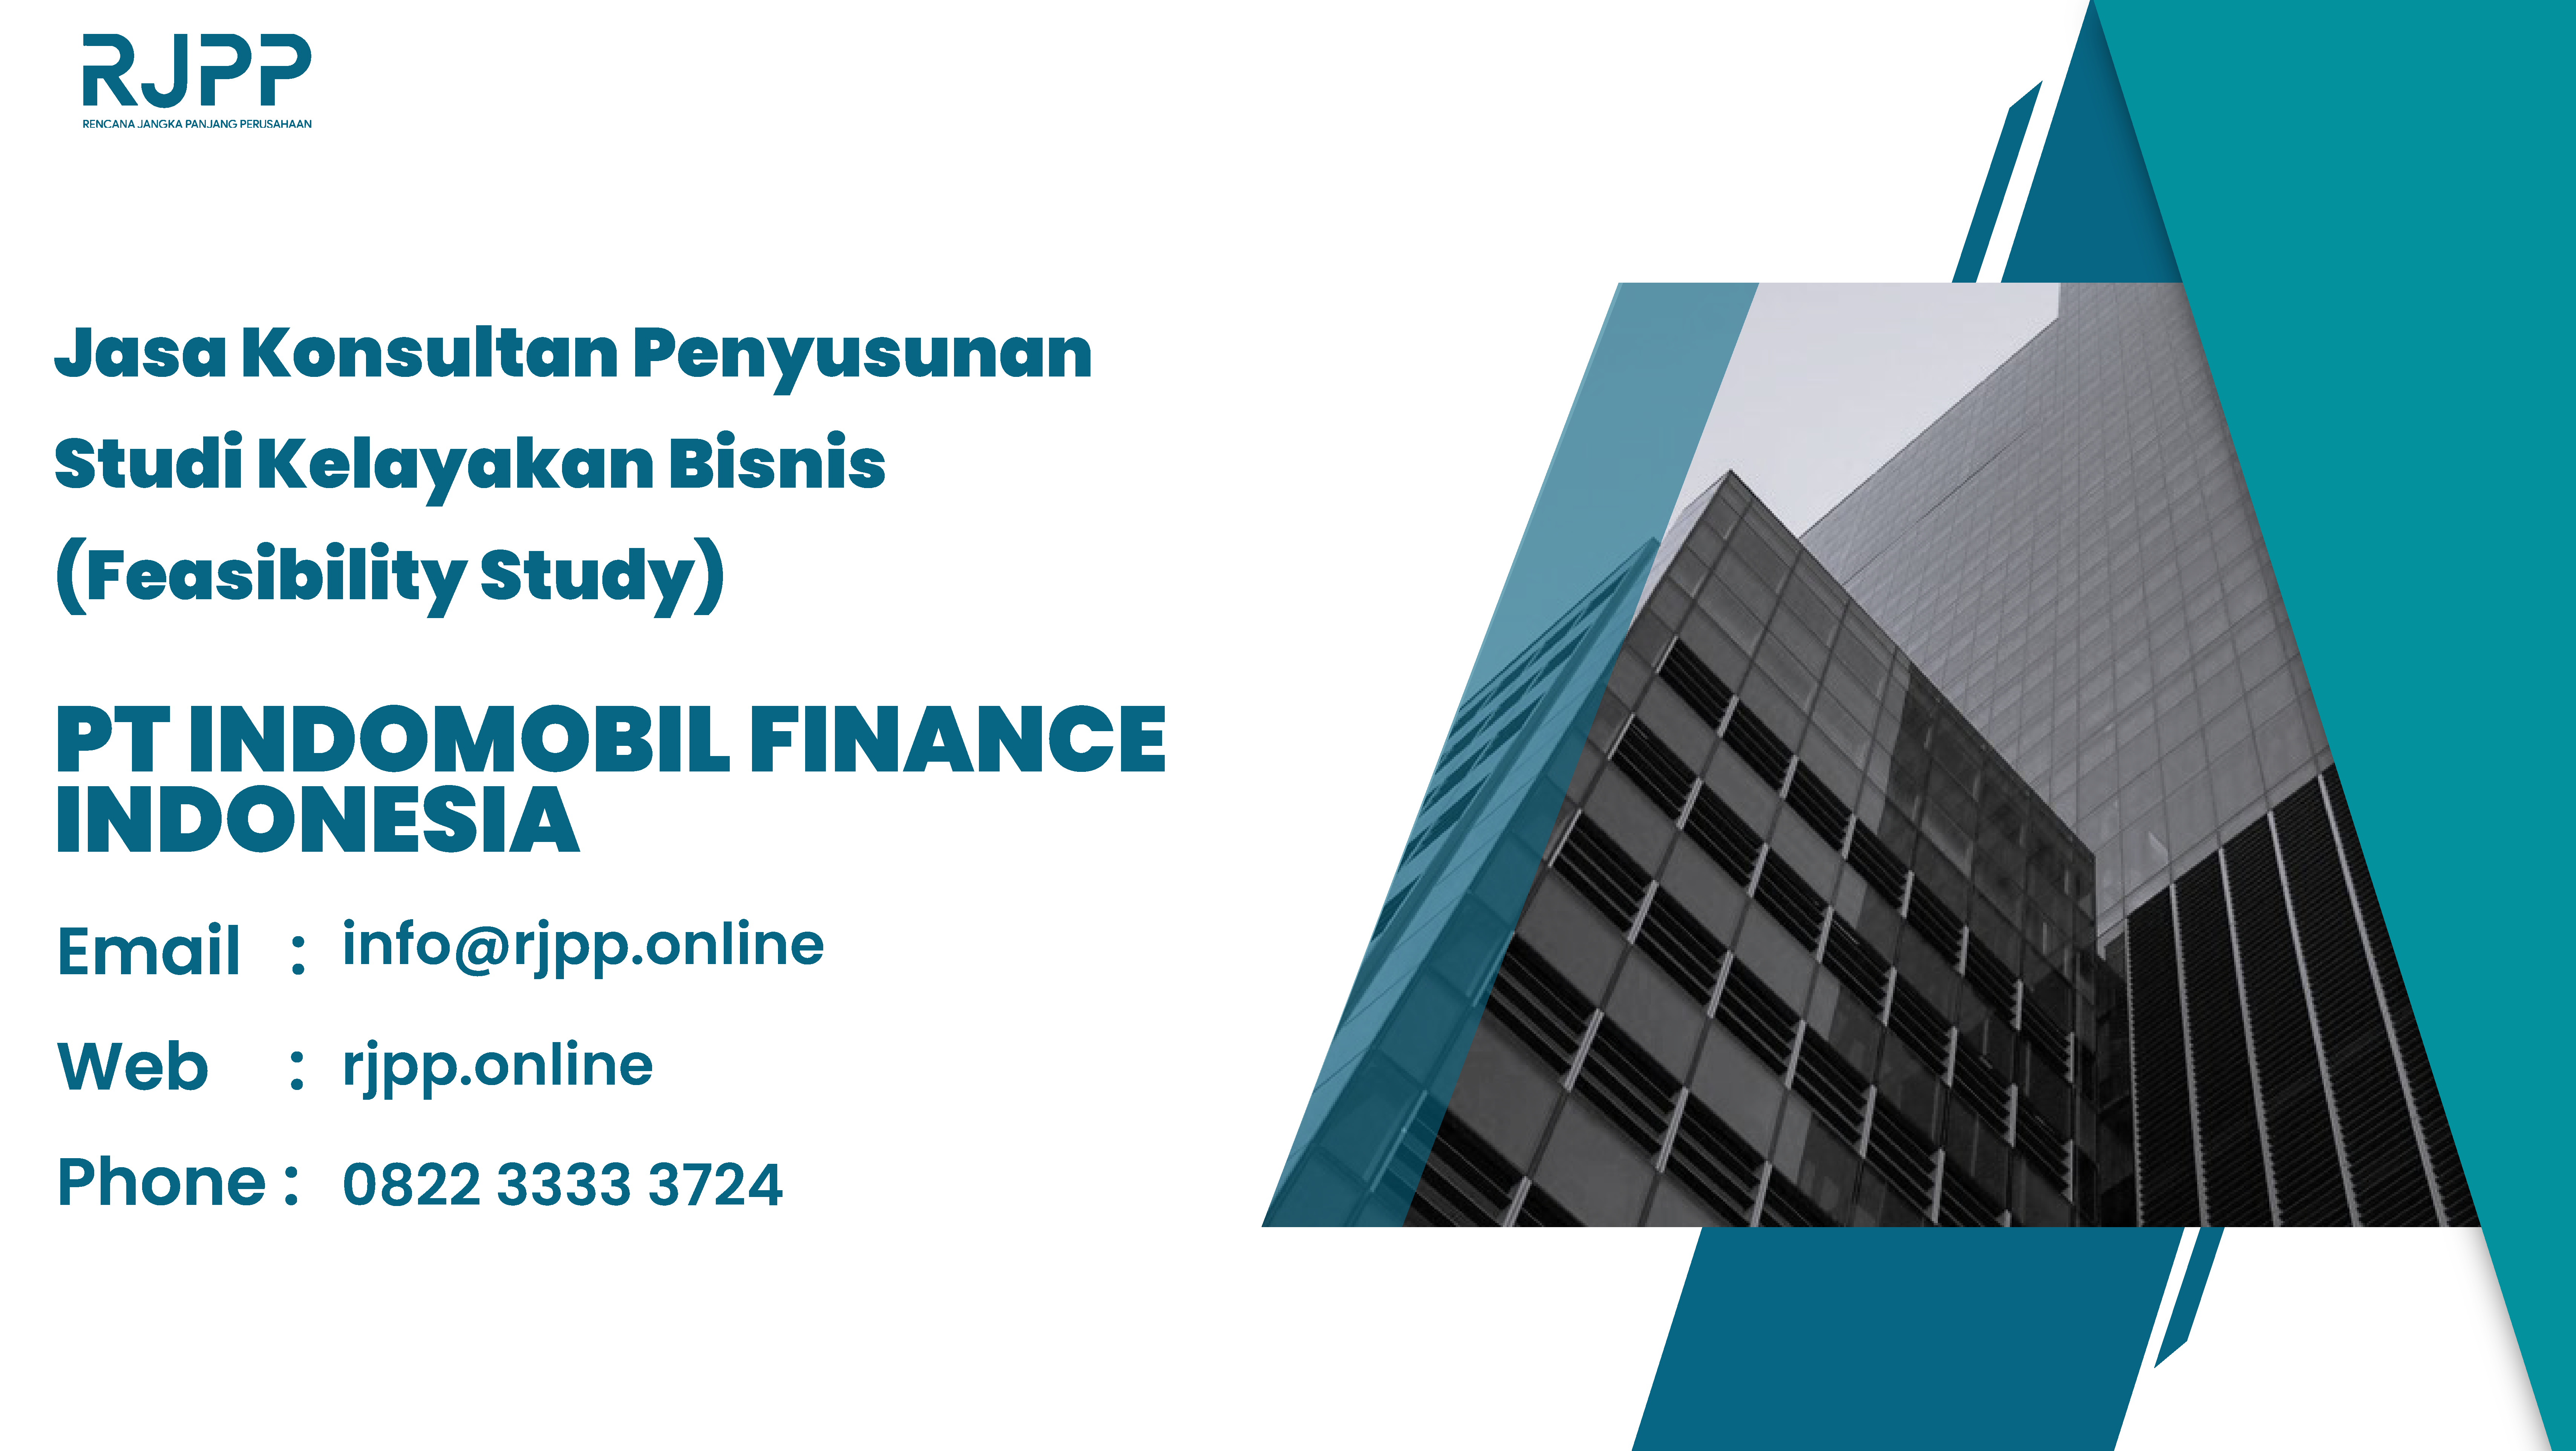 Feasibility Study Indomobil Finance